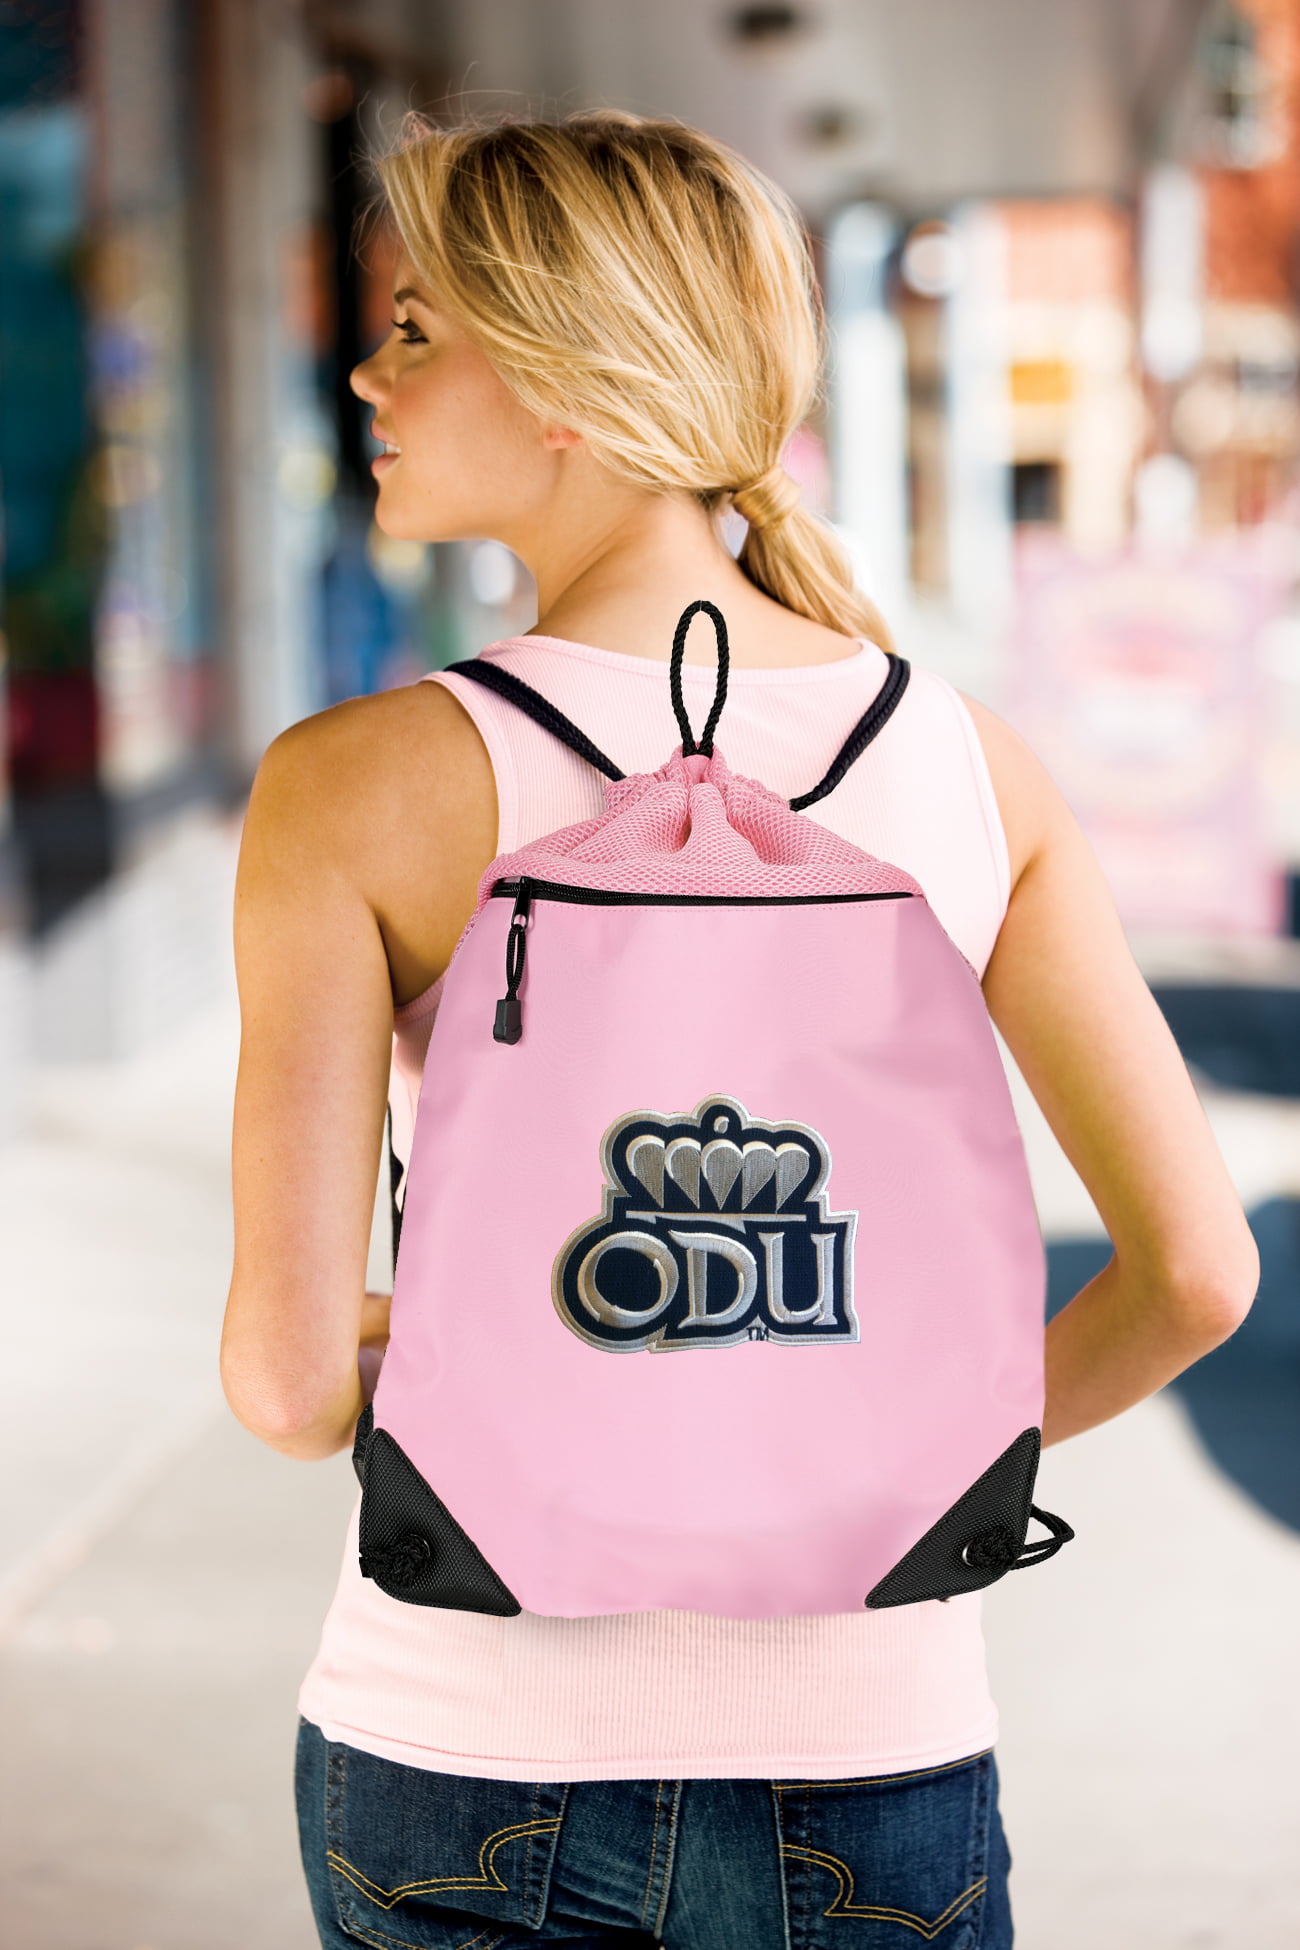 Broad Bay ODU Drawstring Bag Old Dominion University Cinch Pack Backpack Unique MESH & Microfiber 